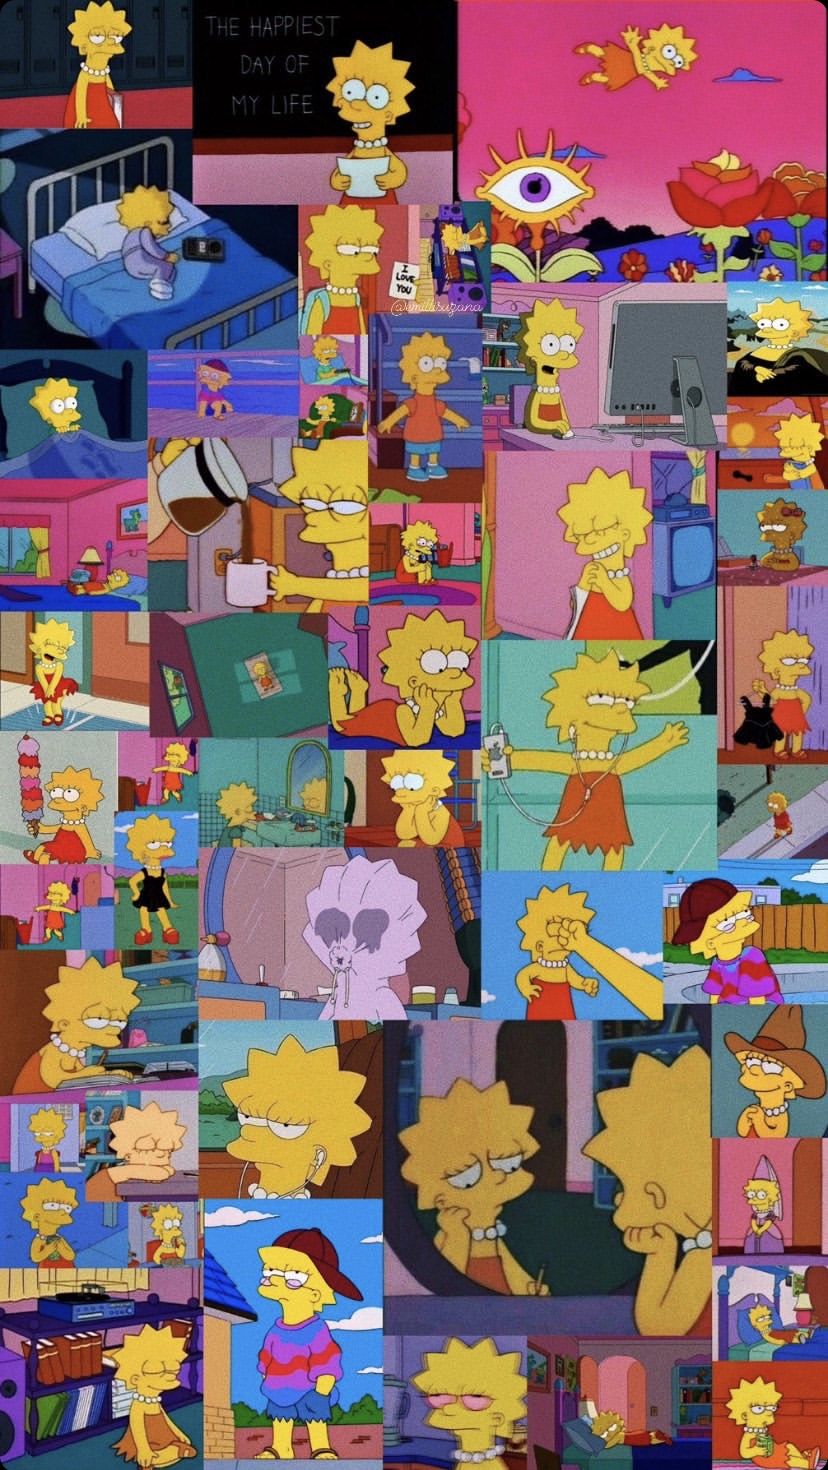 Lisa Simpson Iphone Wallpapers